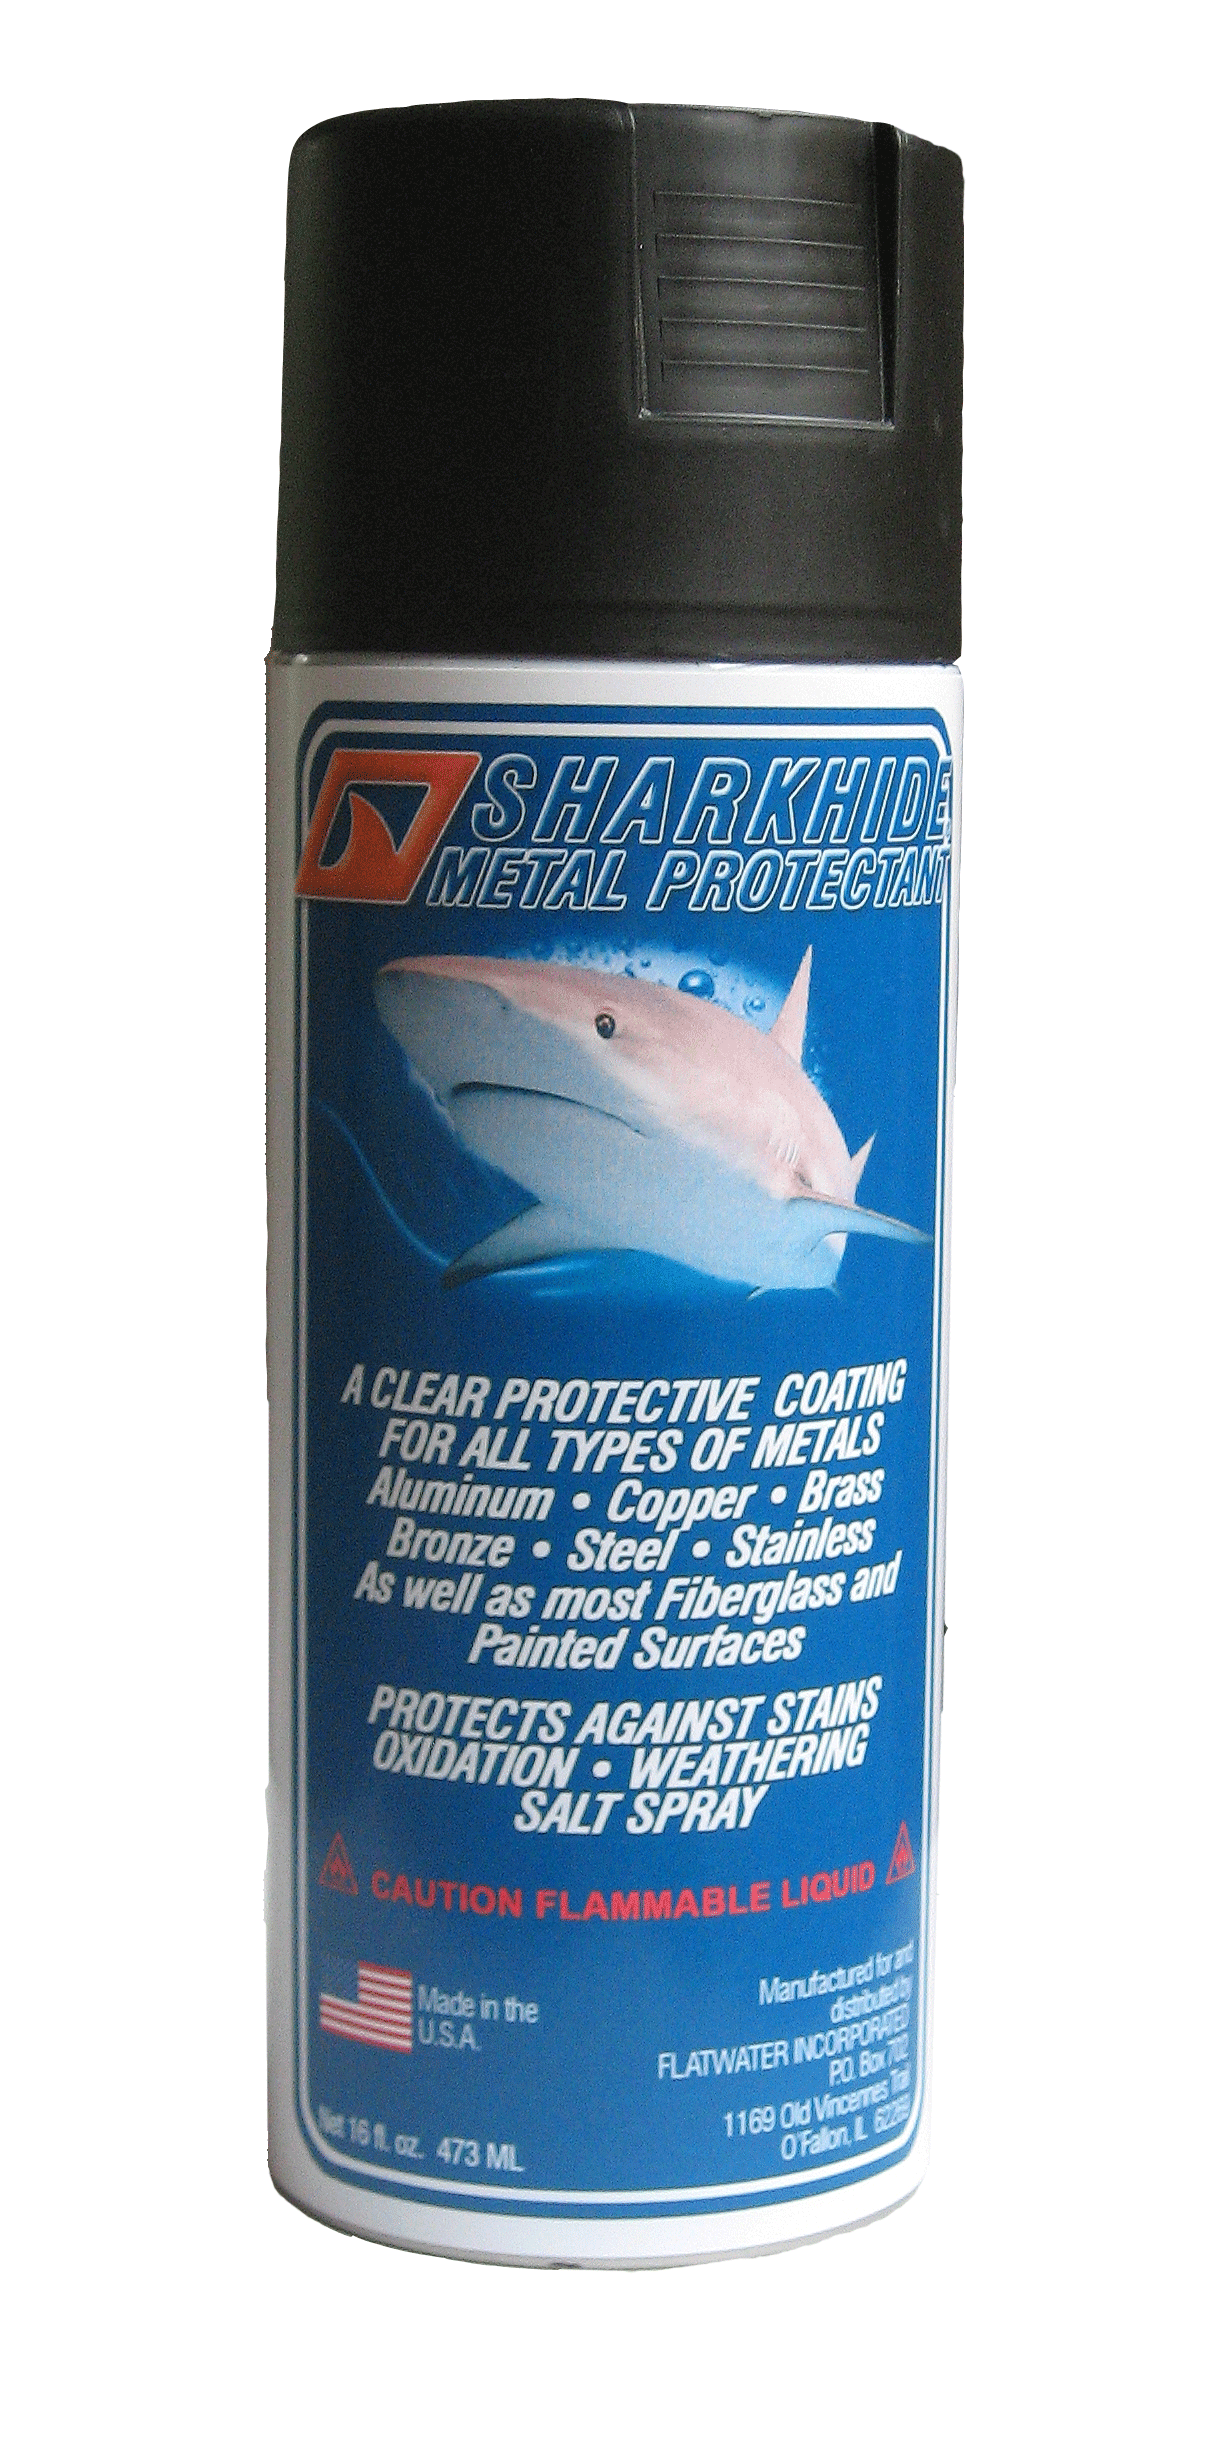 SHARKHIDE Metal Protectant Aerosol